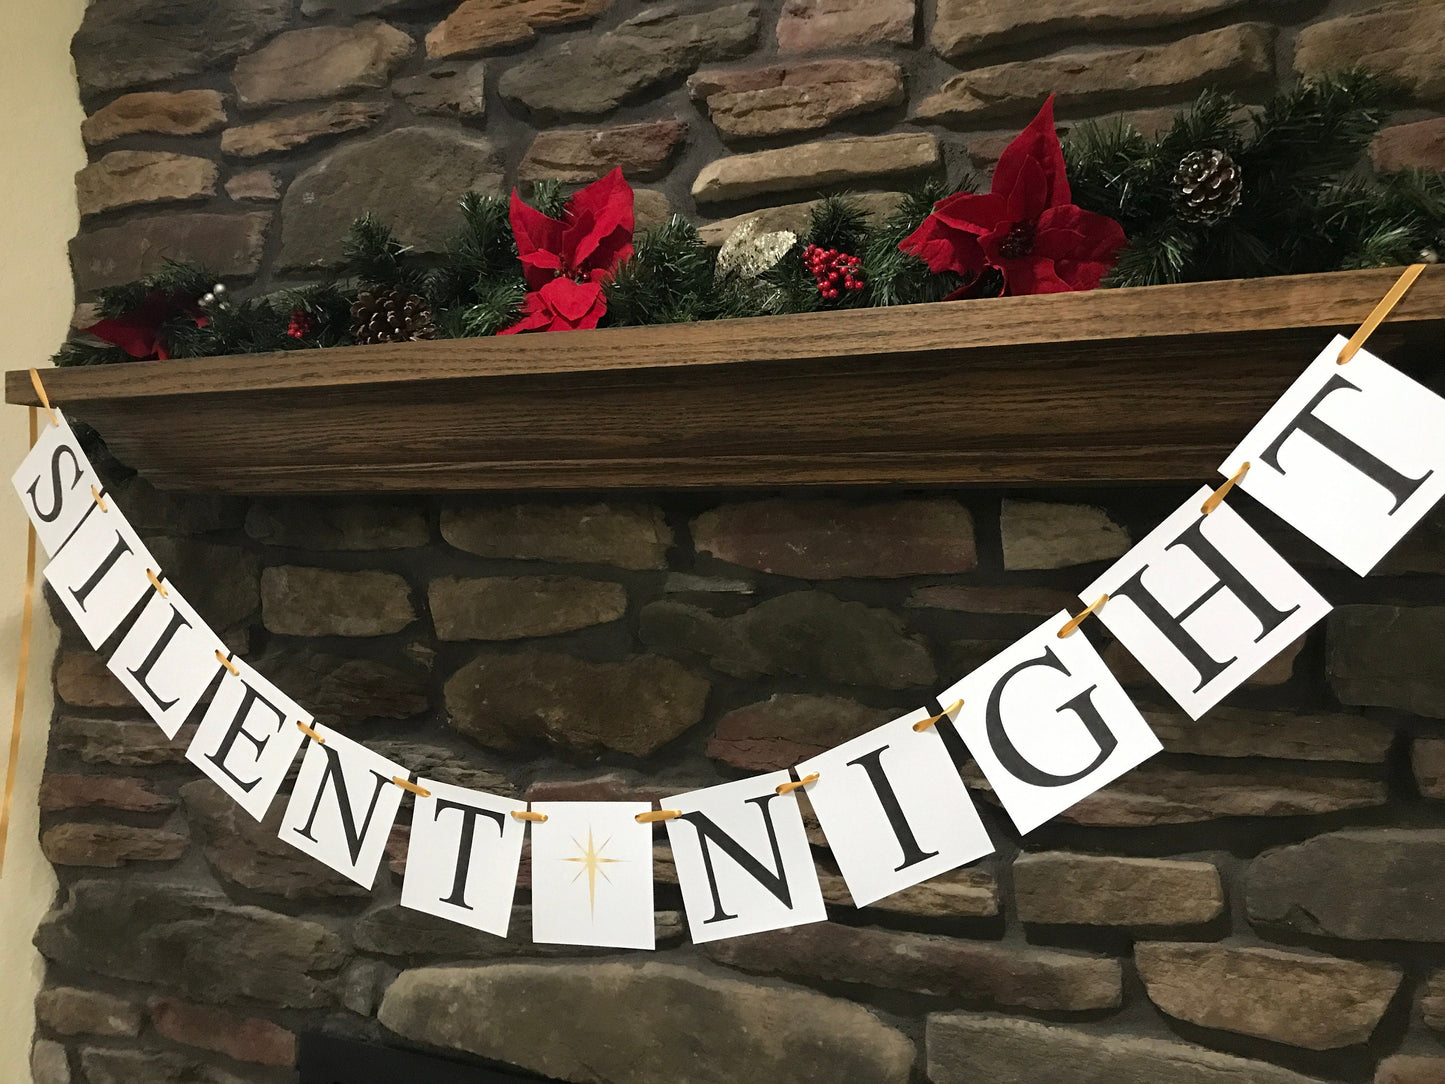 Silent night Banner, Gold North Star Christmas decorations, living room holiday decor, fireplace mantel bunting, Christmas carol garland